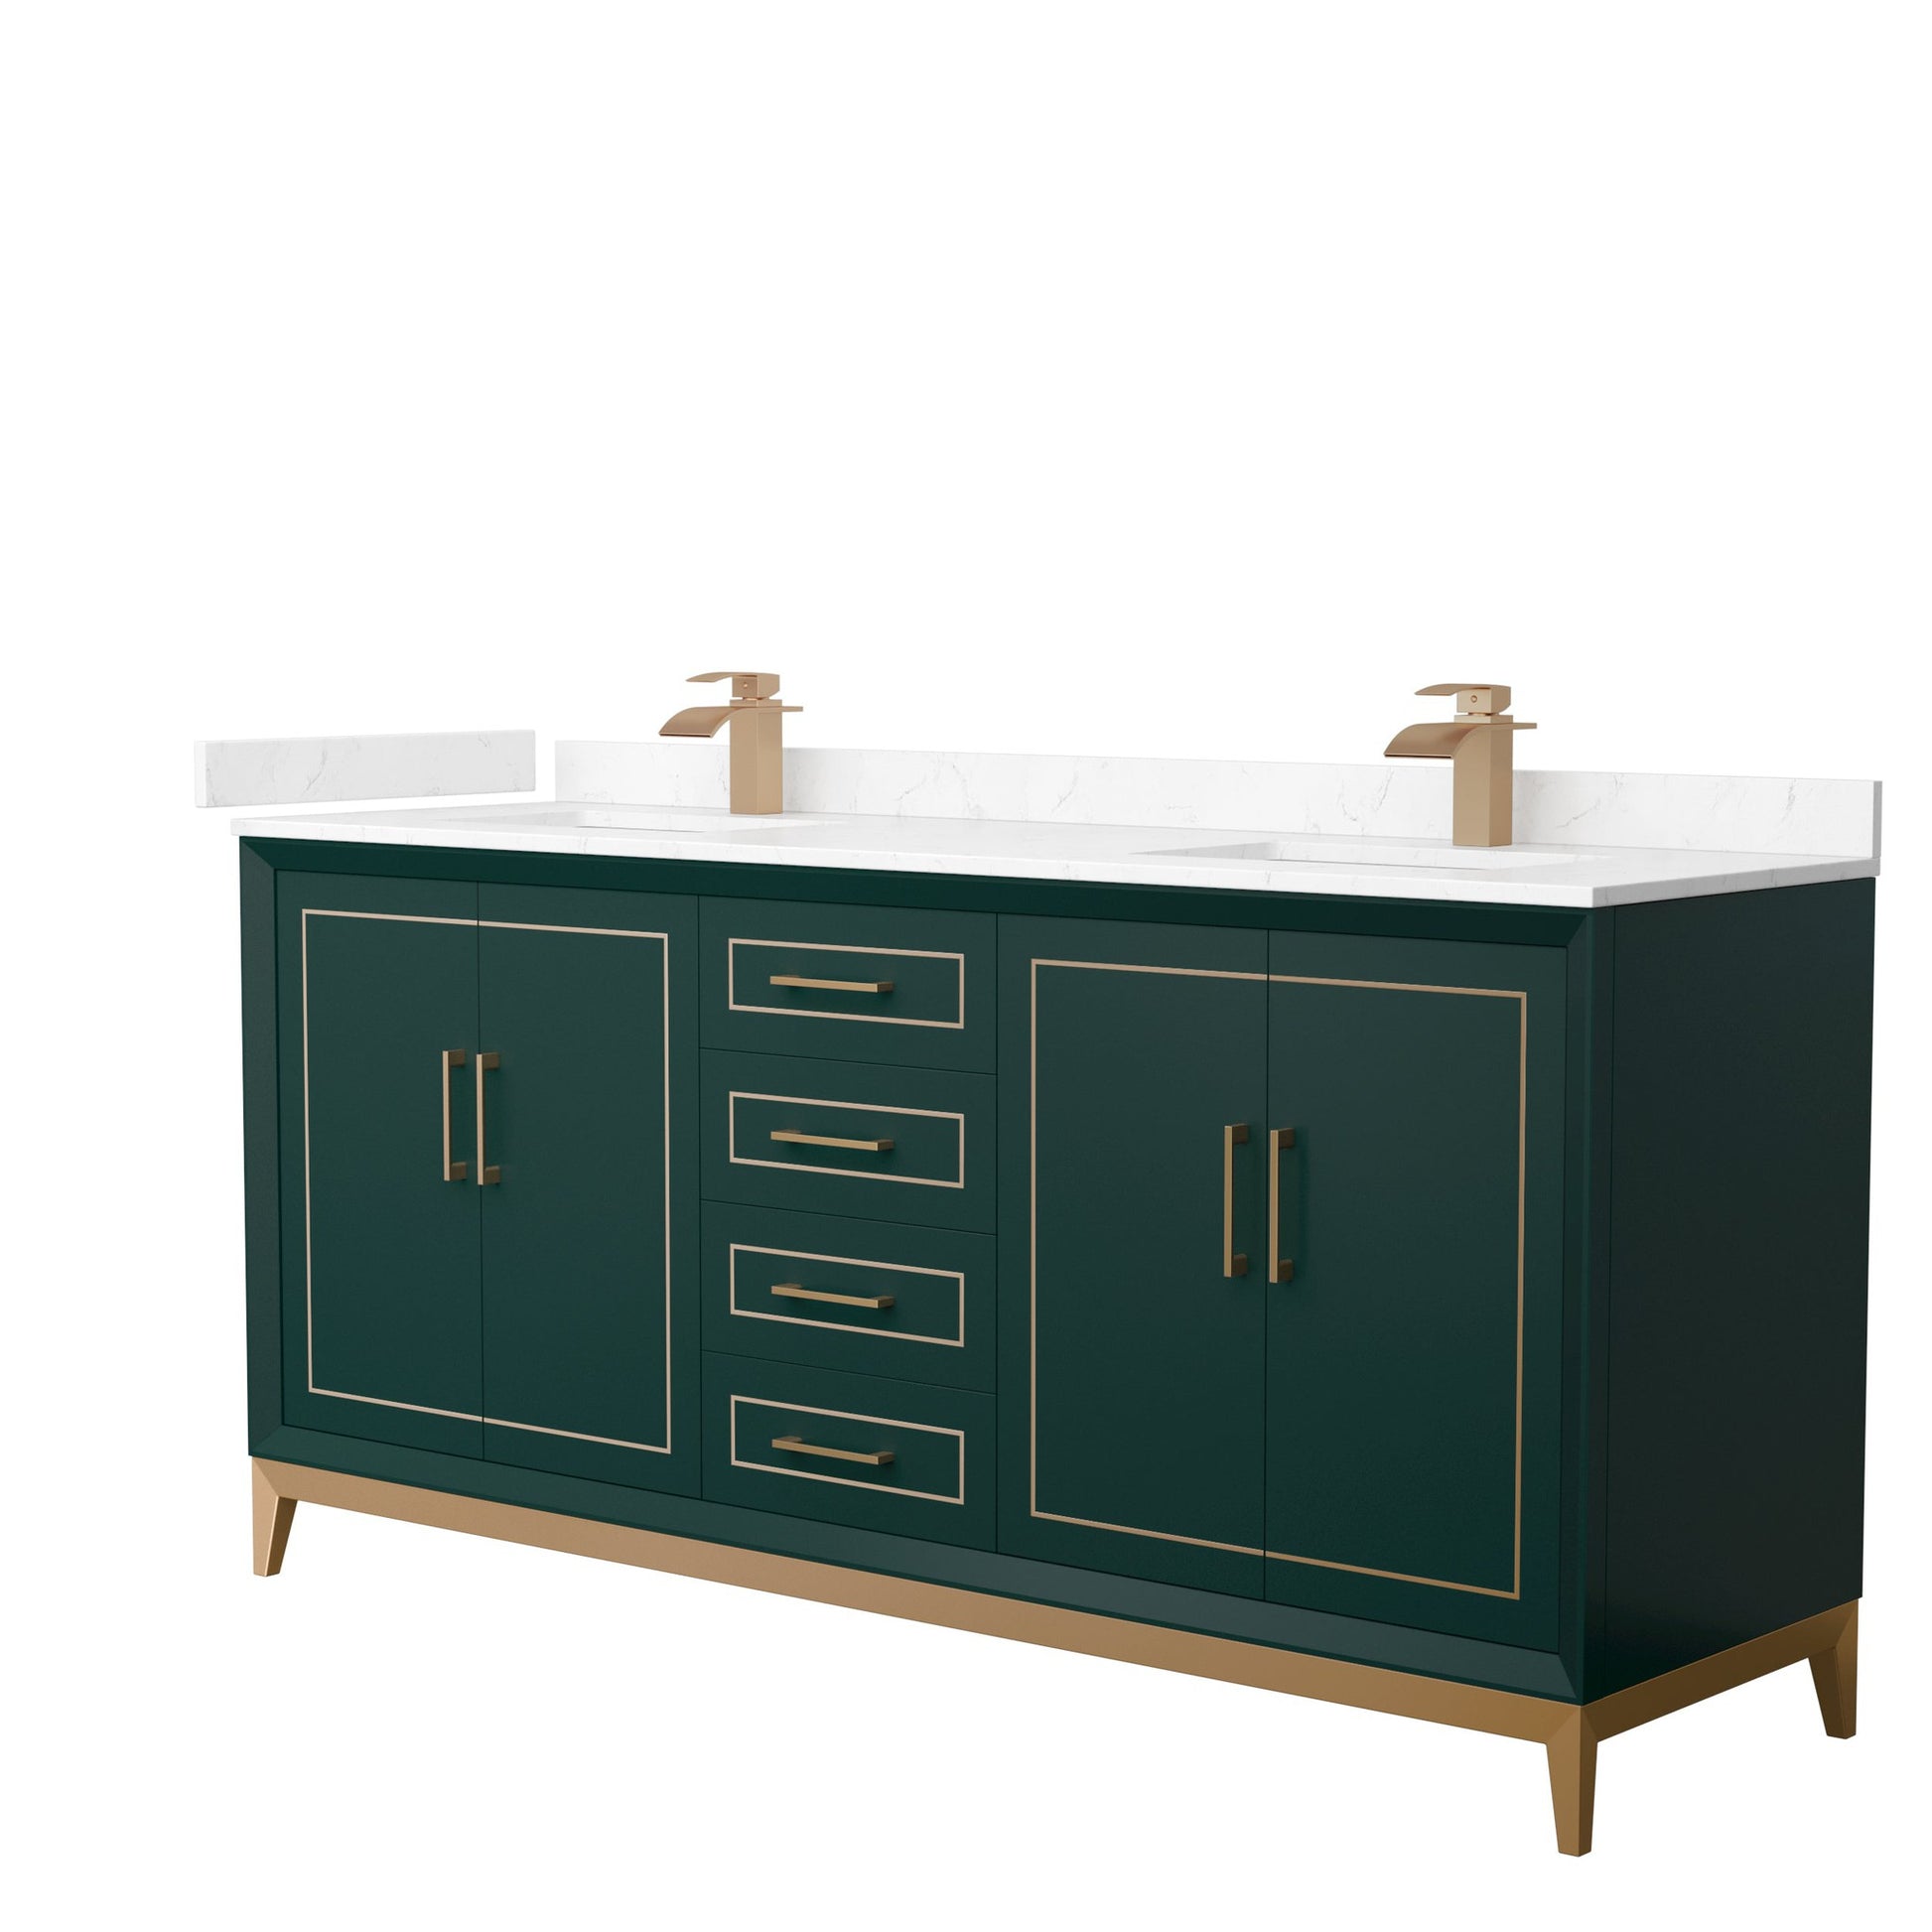 Wyndham Collection Marlena 72" Double Bathroom Vanity in Green, Carrara Cultured Marble Countertop, Undermount Square Sinks, Satin Bronze Trim